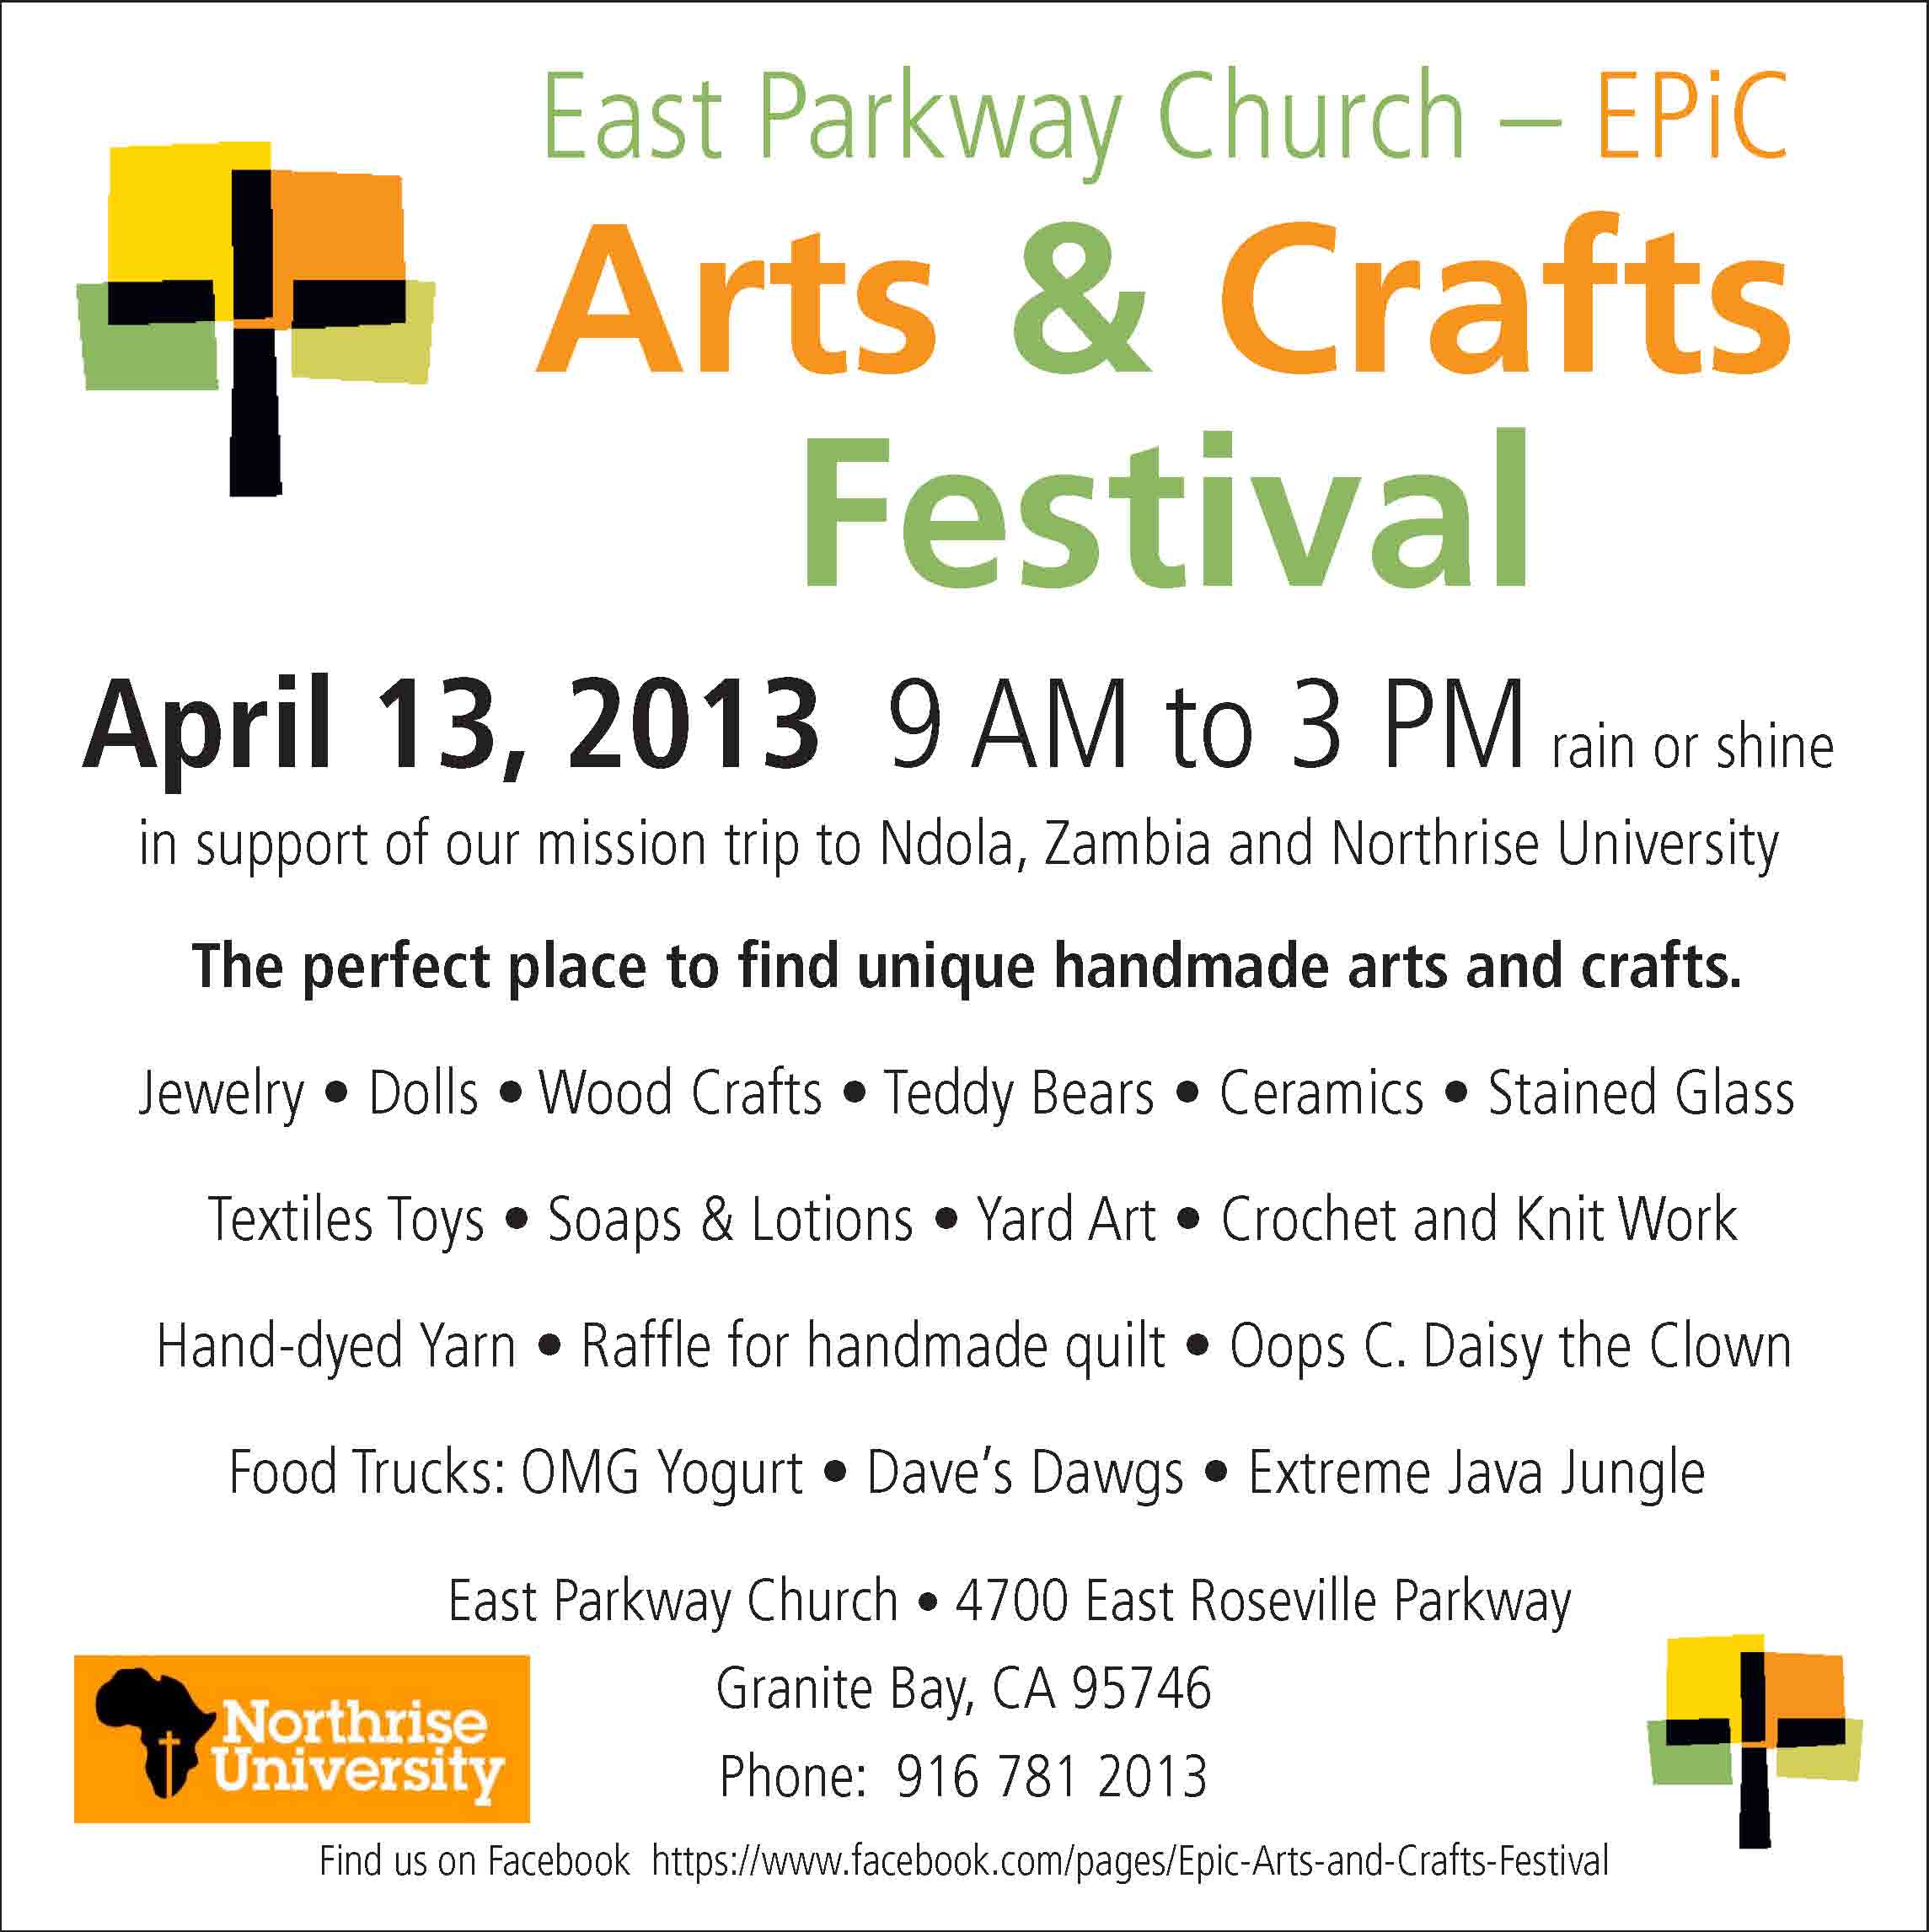 EPiC Arts & Crafts Festival